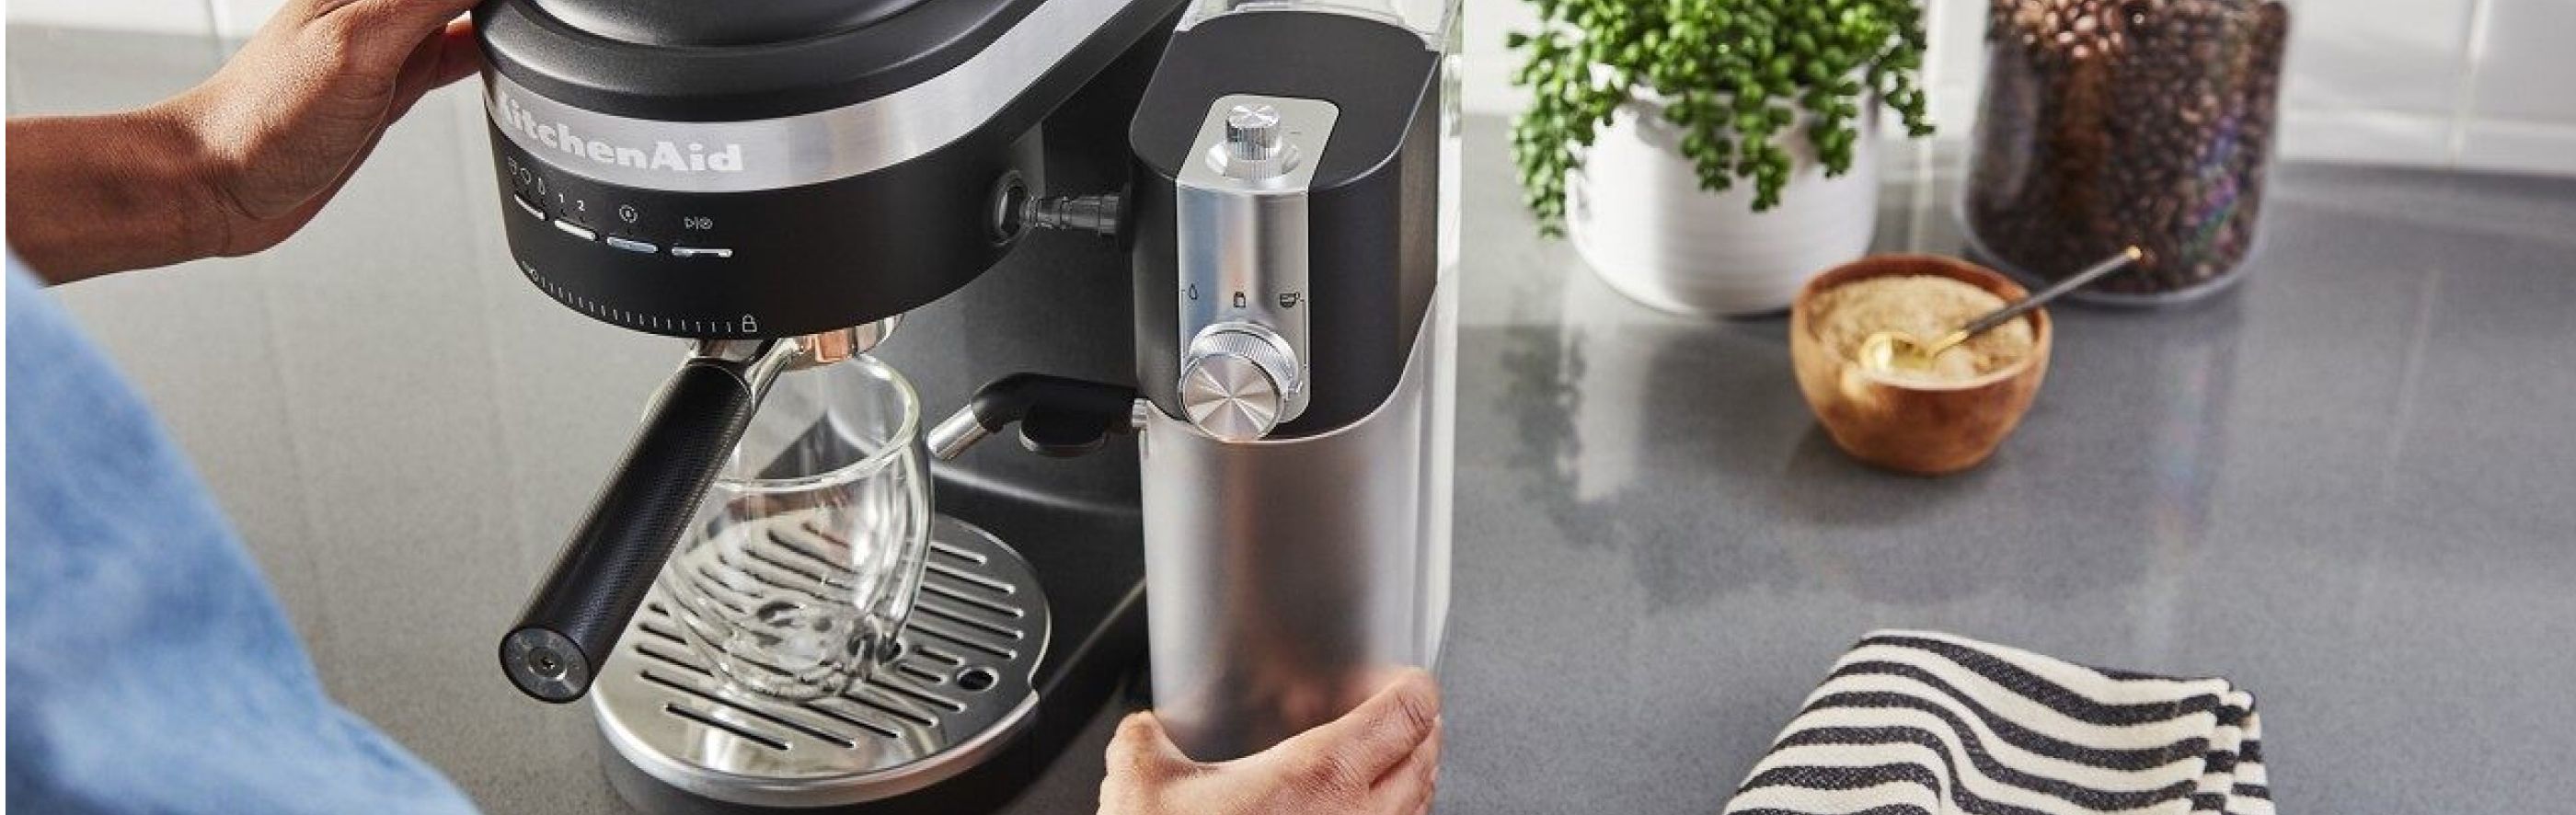  Hand replacing water tank in KitchenAid® espresso maker